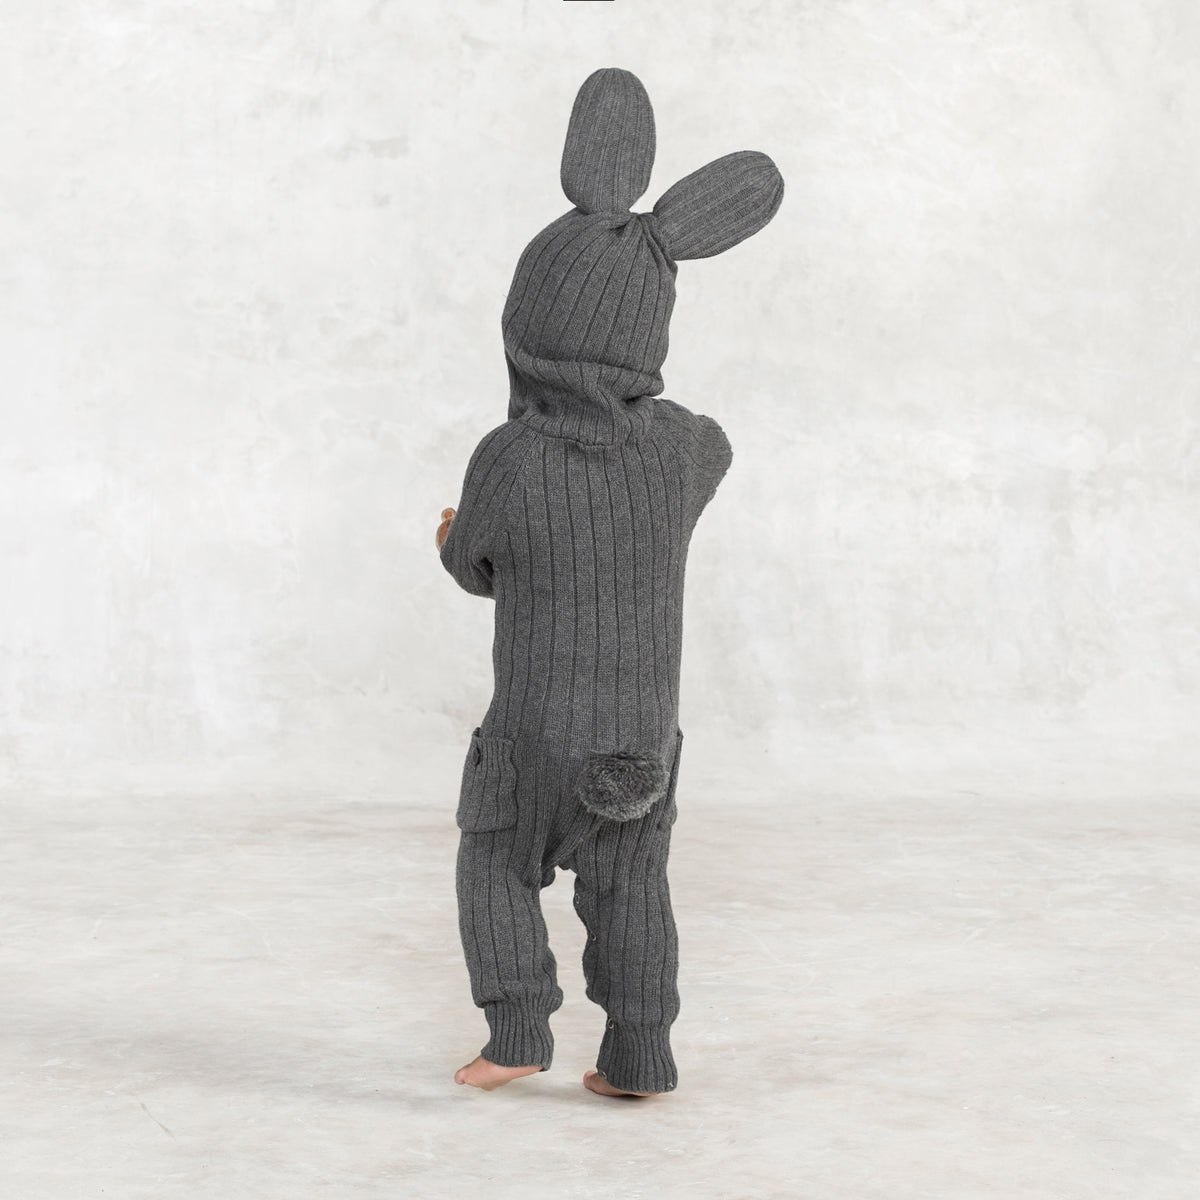 Newborn Baby Dressed in Rabbit Suit Stock Image - Image of boys, fashion:  52579357